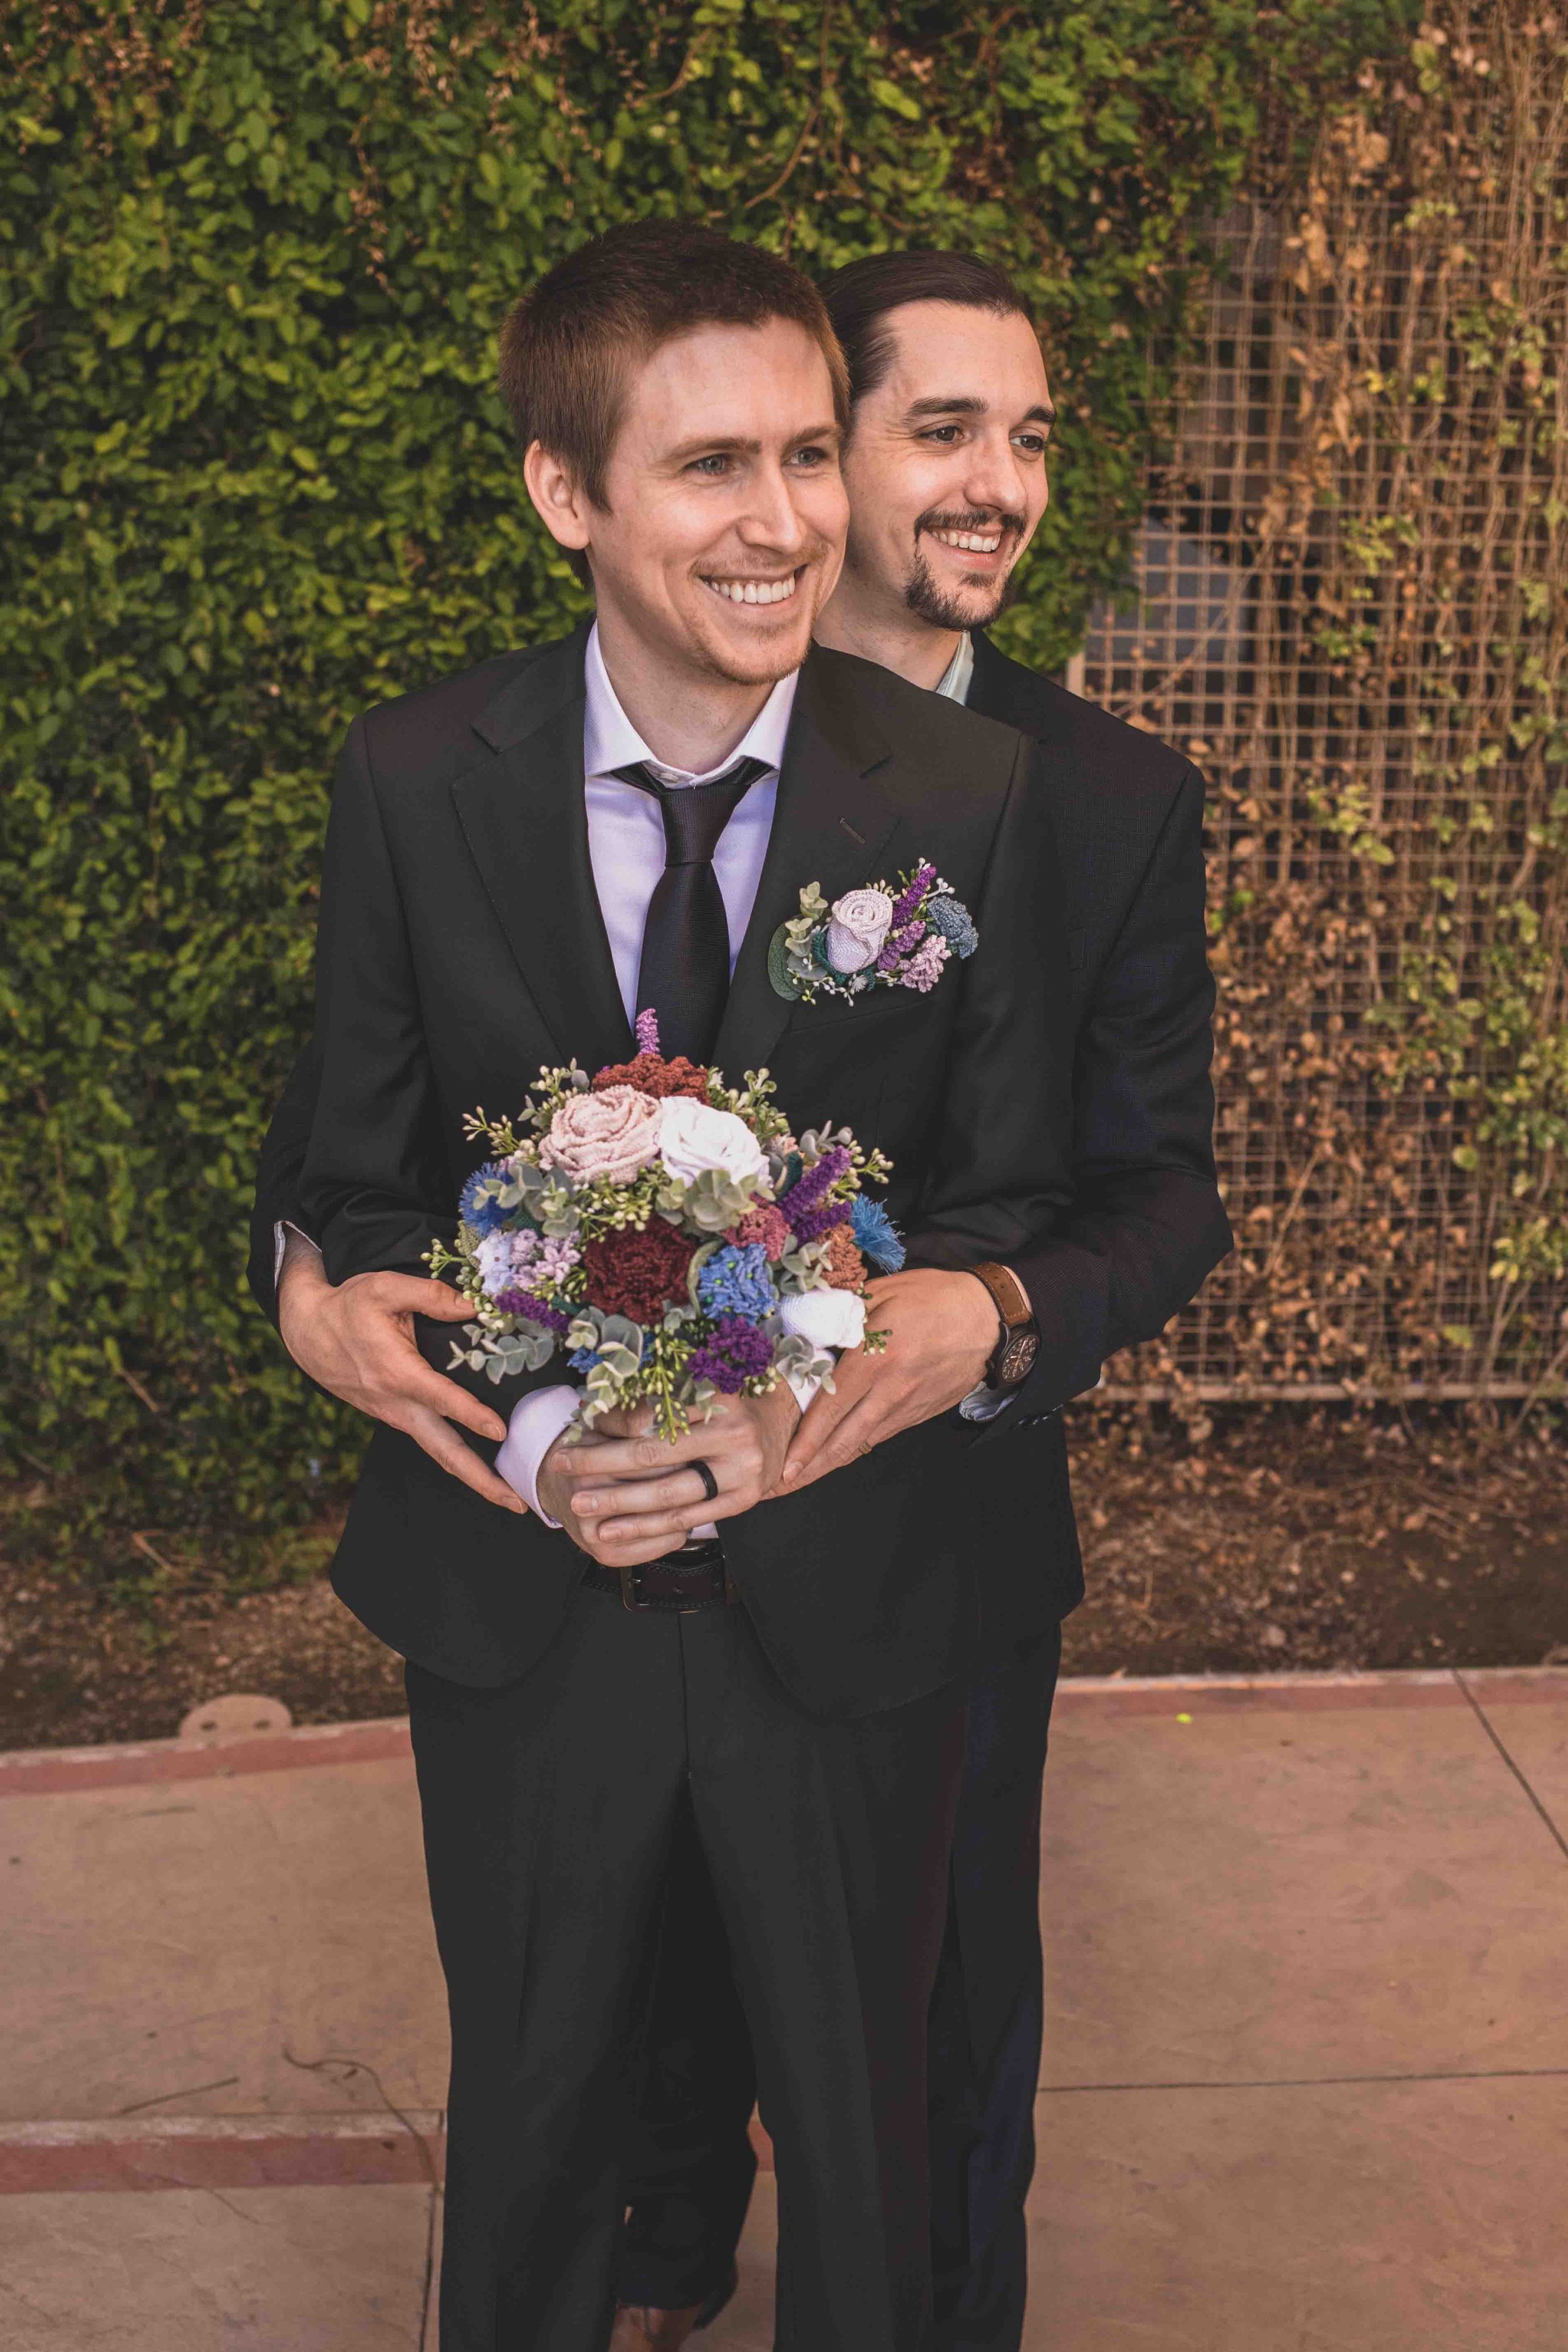 Groom and his bestie at his wedding day by Gilbert, Arizona Wedding Photographer Jennifer Lind Schutsky.